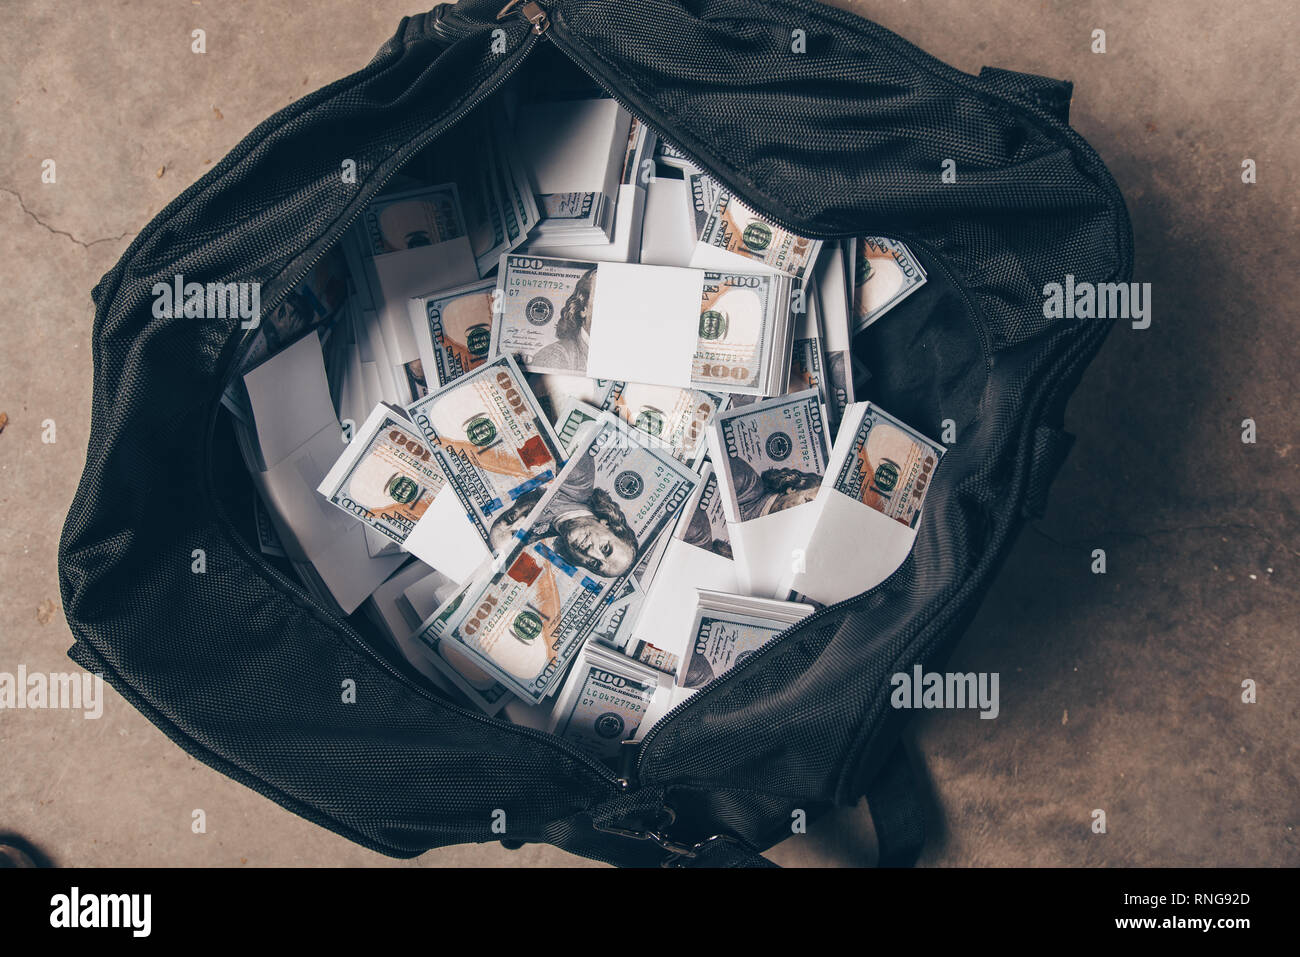 Image Of Big Bag Full Of American Dollars On The Floor Stock Photo